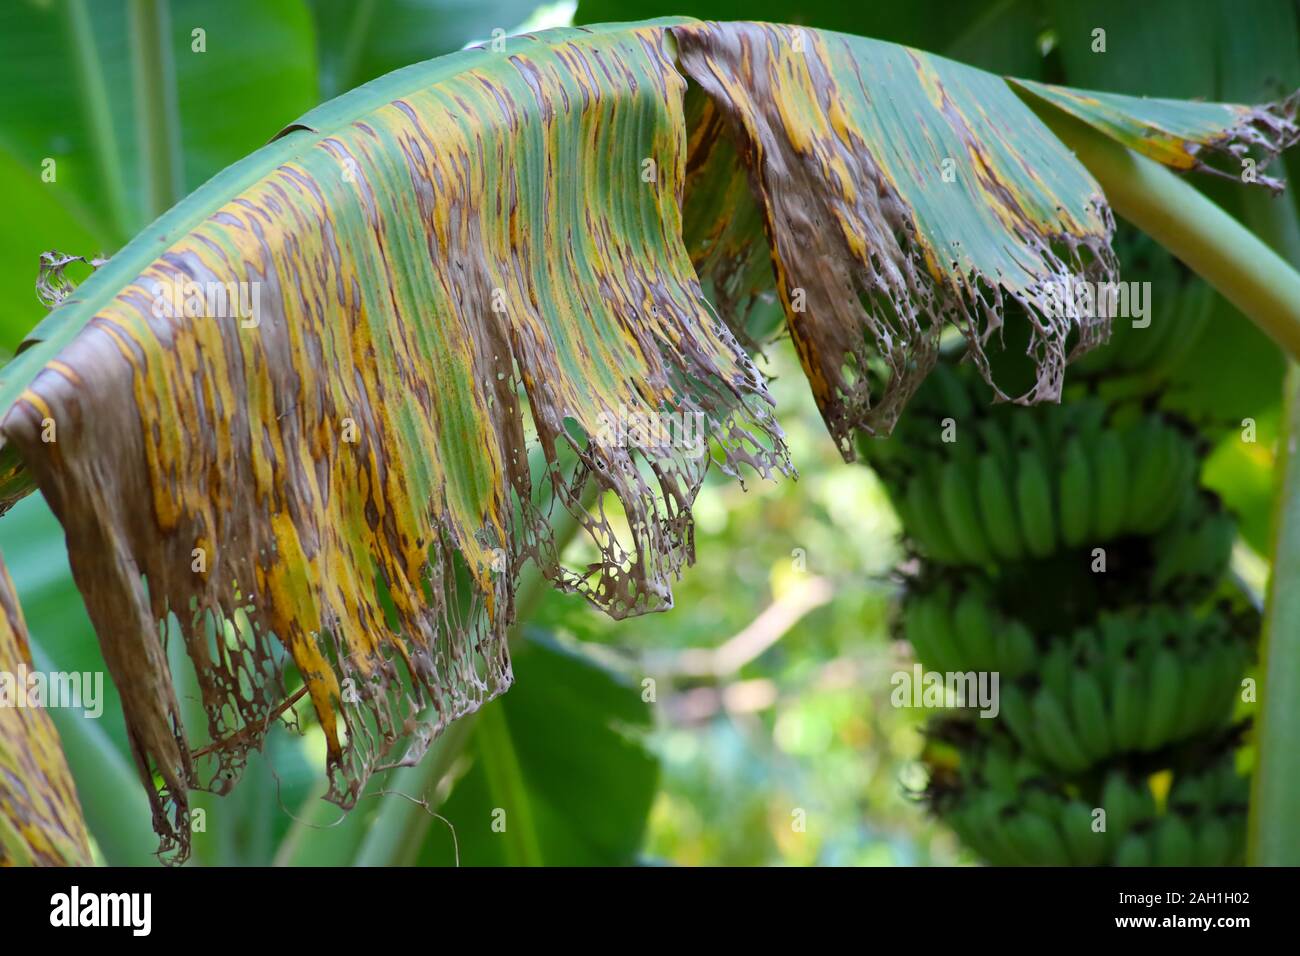 Banana tree disease, Symptoms of black sigatoka on banana foliage, Black sigatoka infected plant Stock Photo